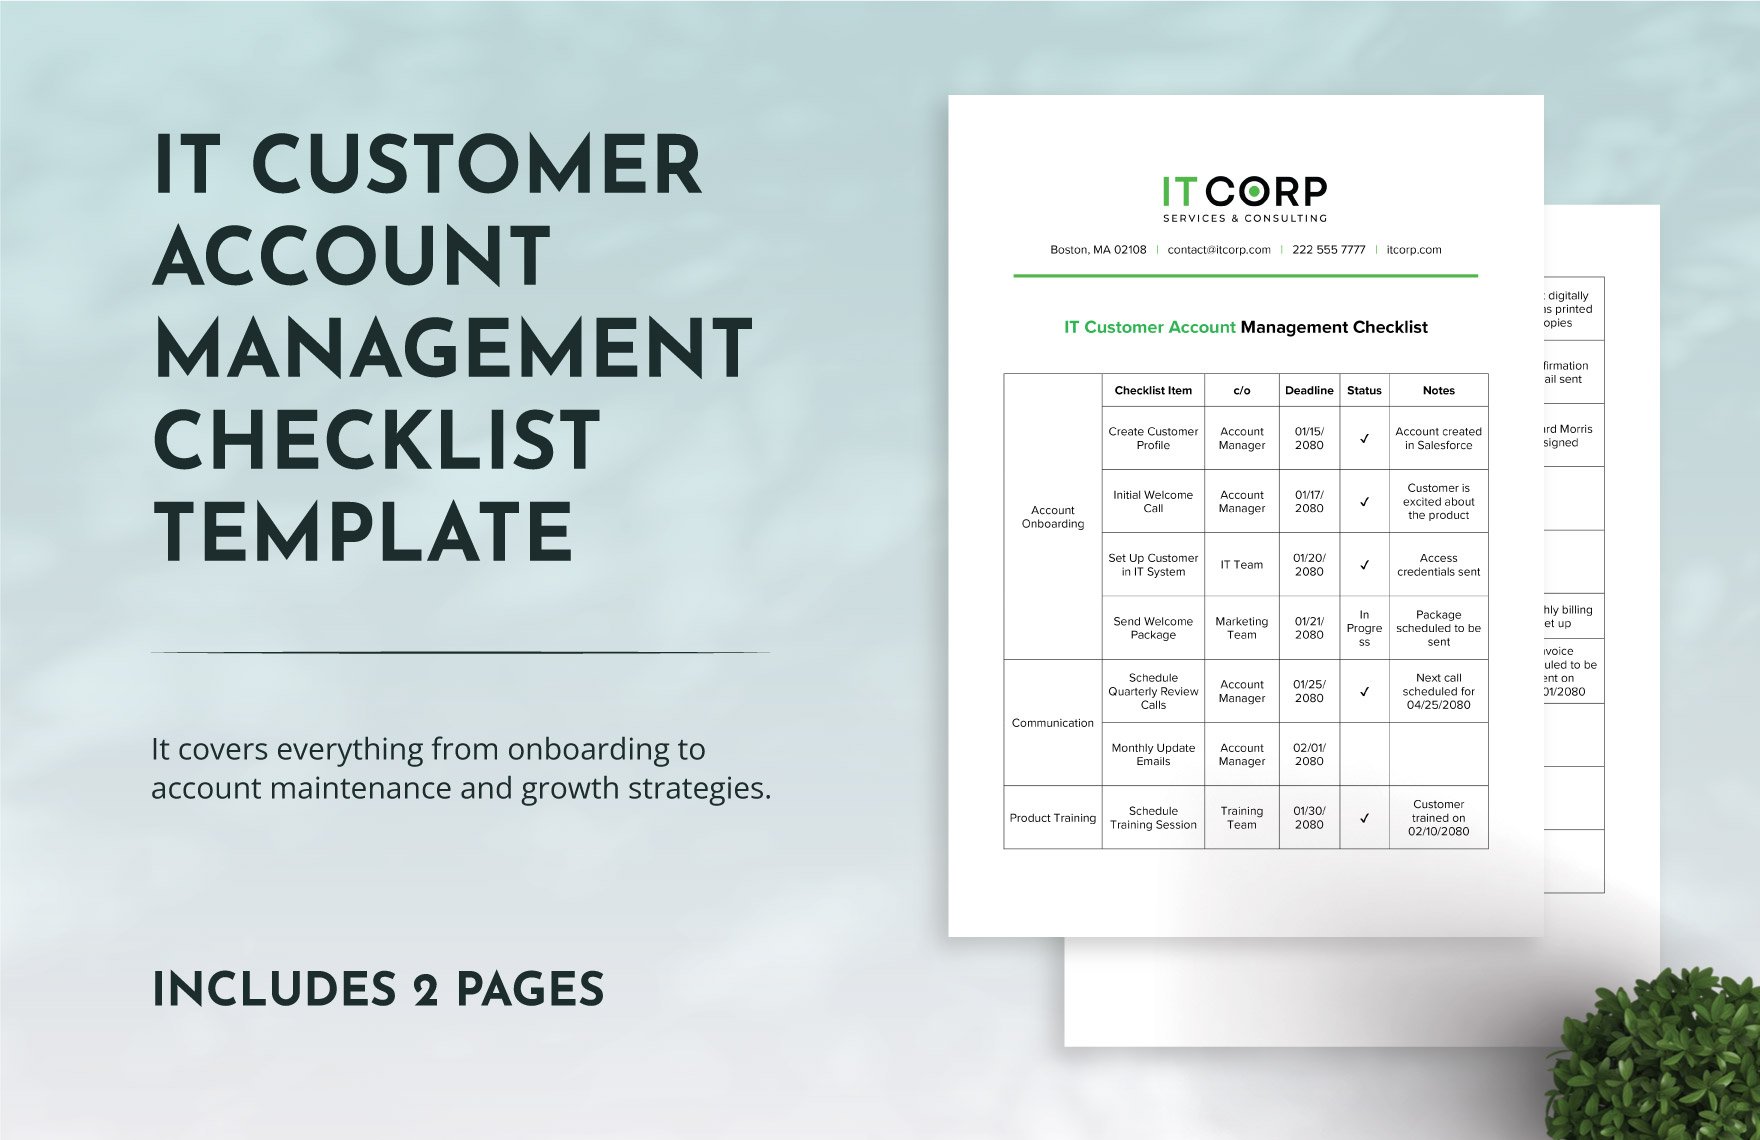 IT Customer Account Management Checklist Template